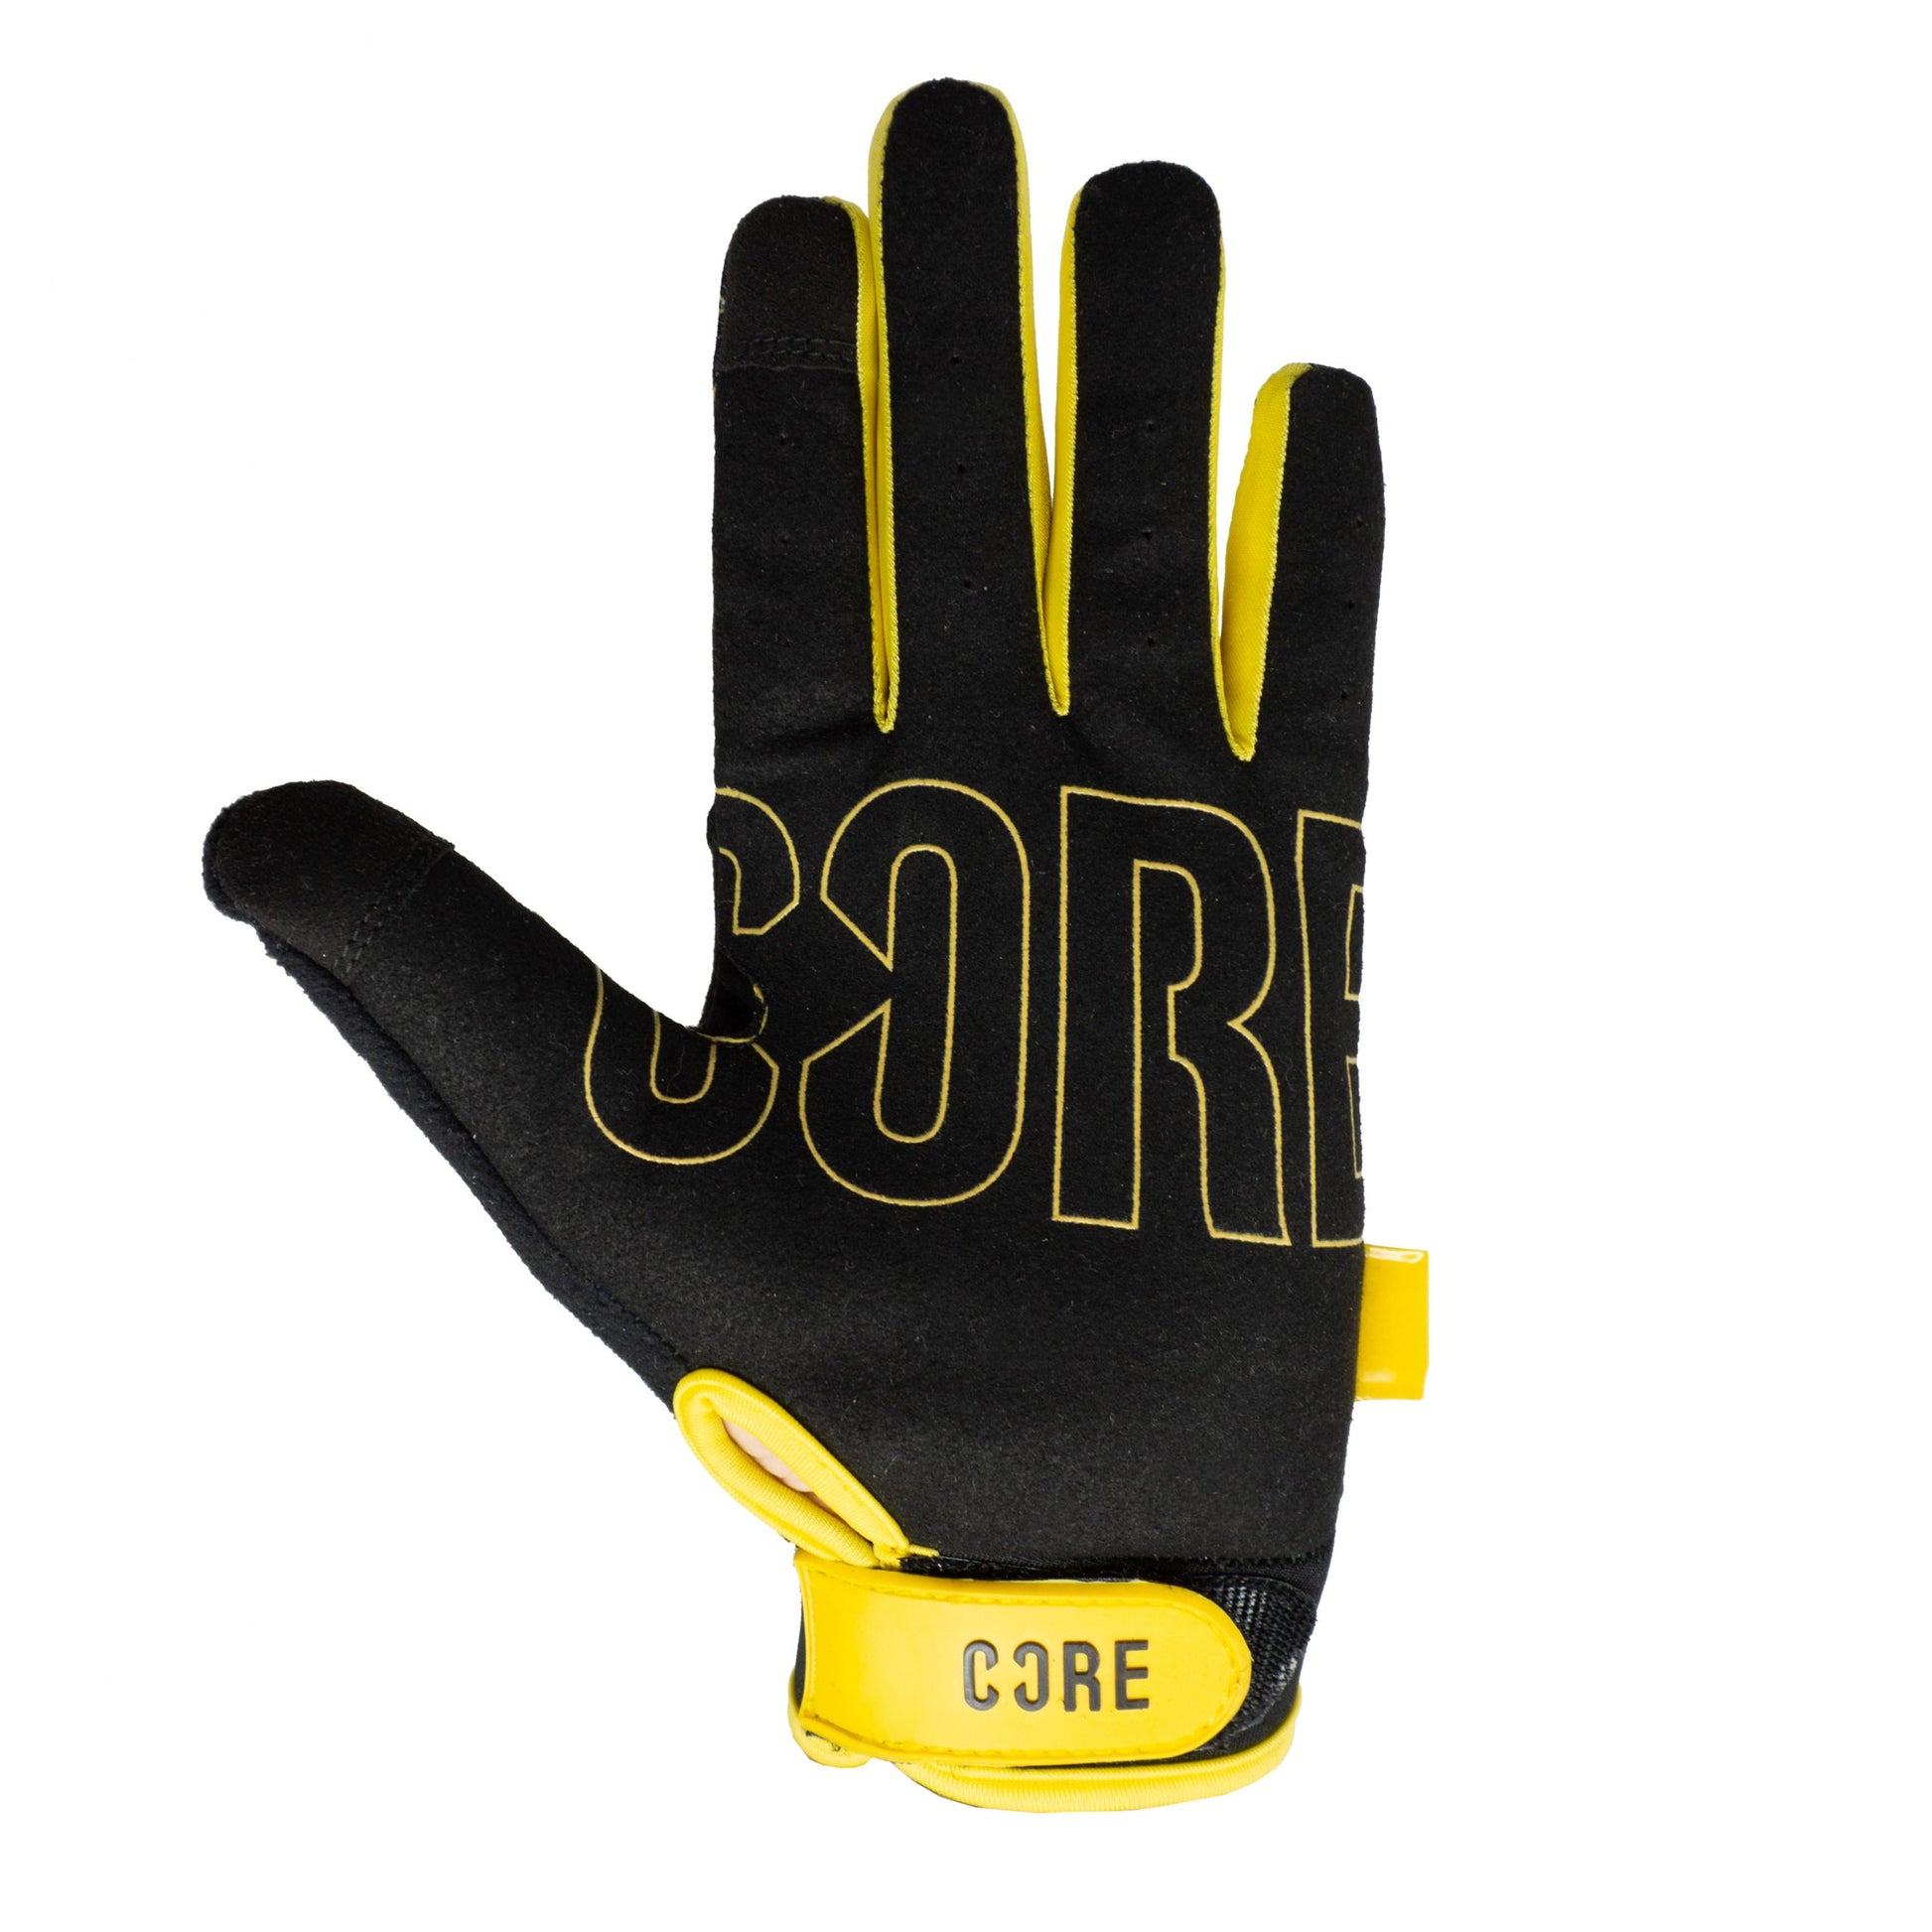 CORE Protection Gloves SR – Black / Gold Geo - Prime Delux Store